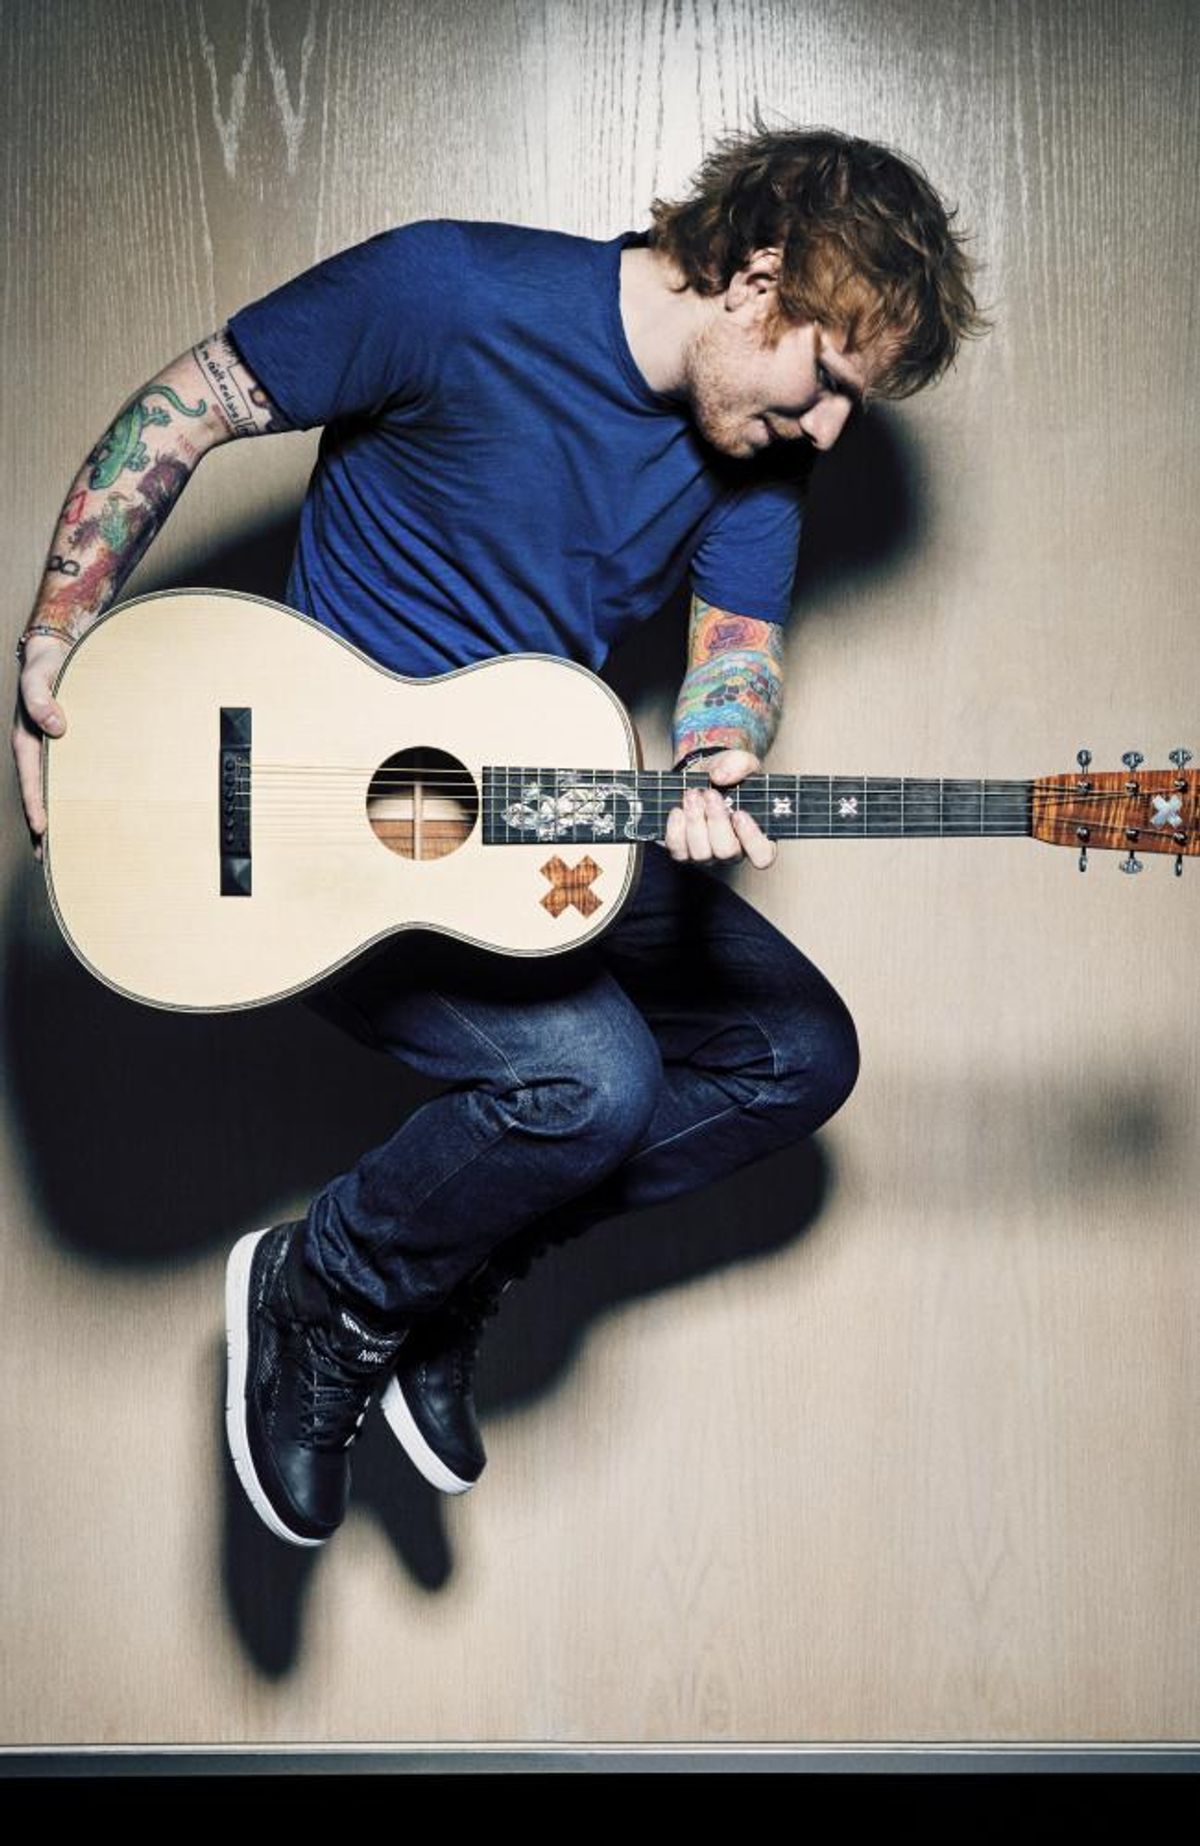 12 Reasons We Love Ed Sheeran